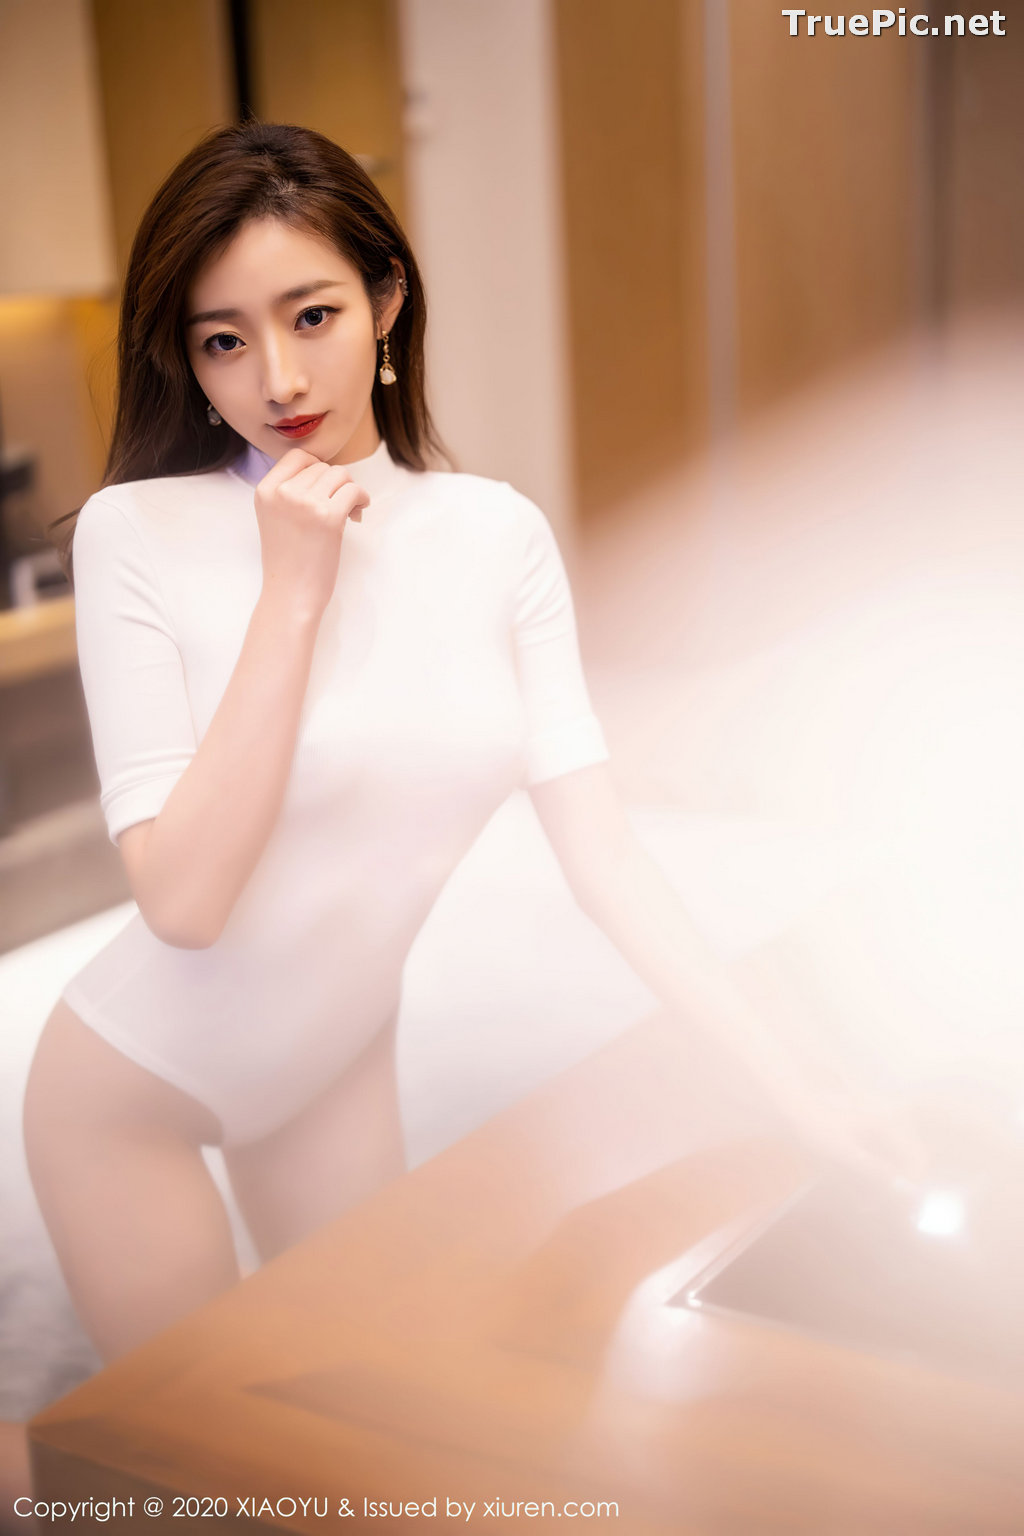 Image XiaoYu Vol.389 - Chinese Model - 安琪 Yee - Beautiful In White - TruePic.net - Picture-80